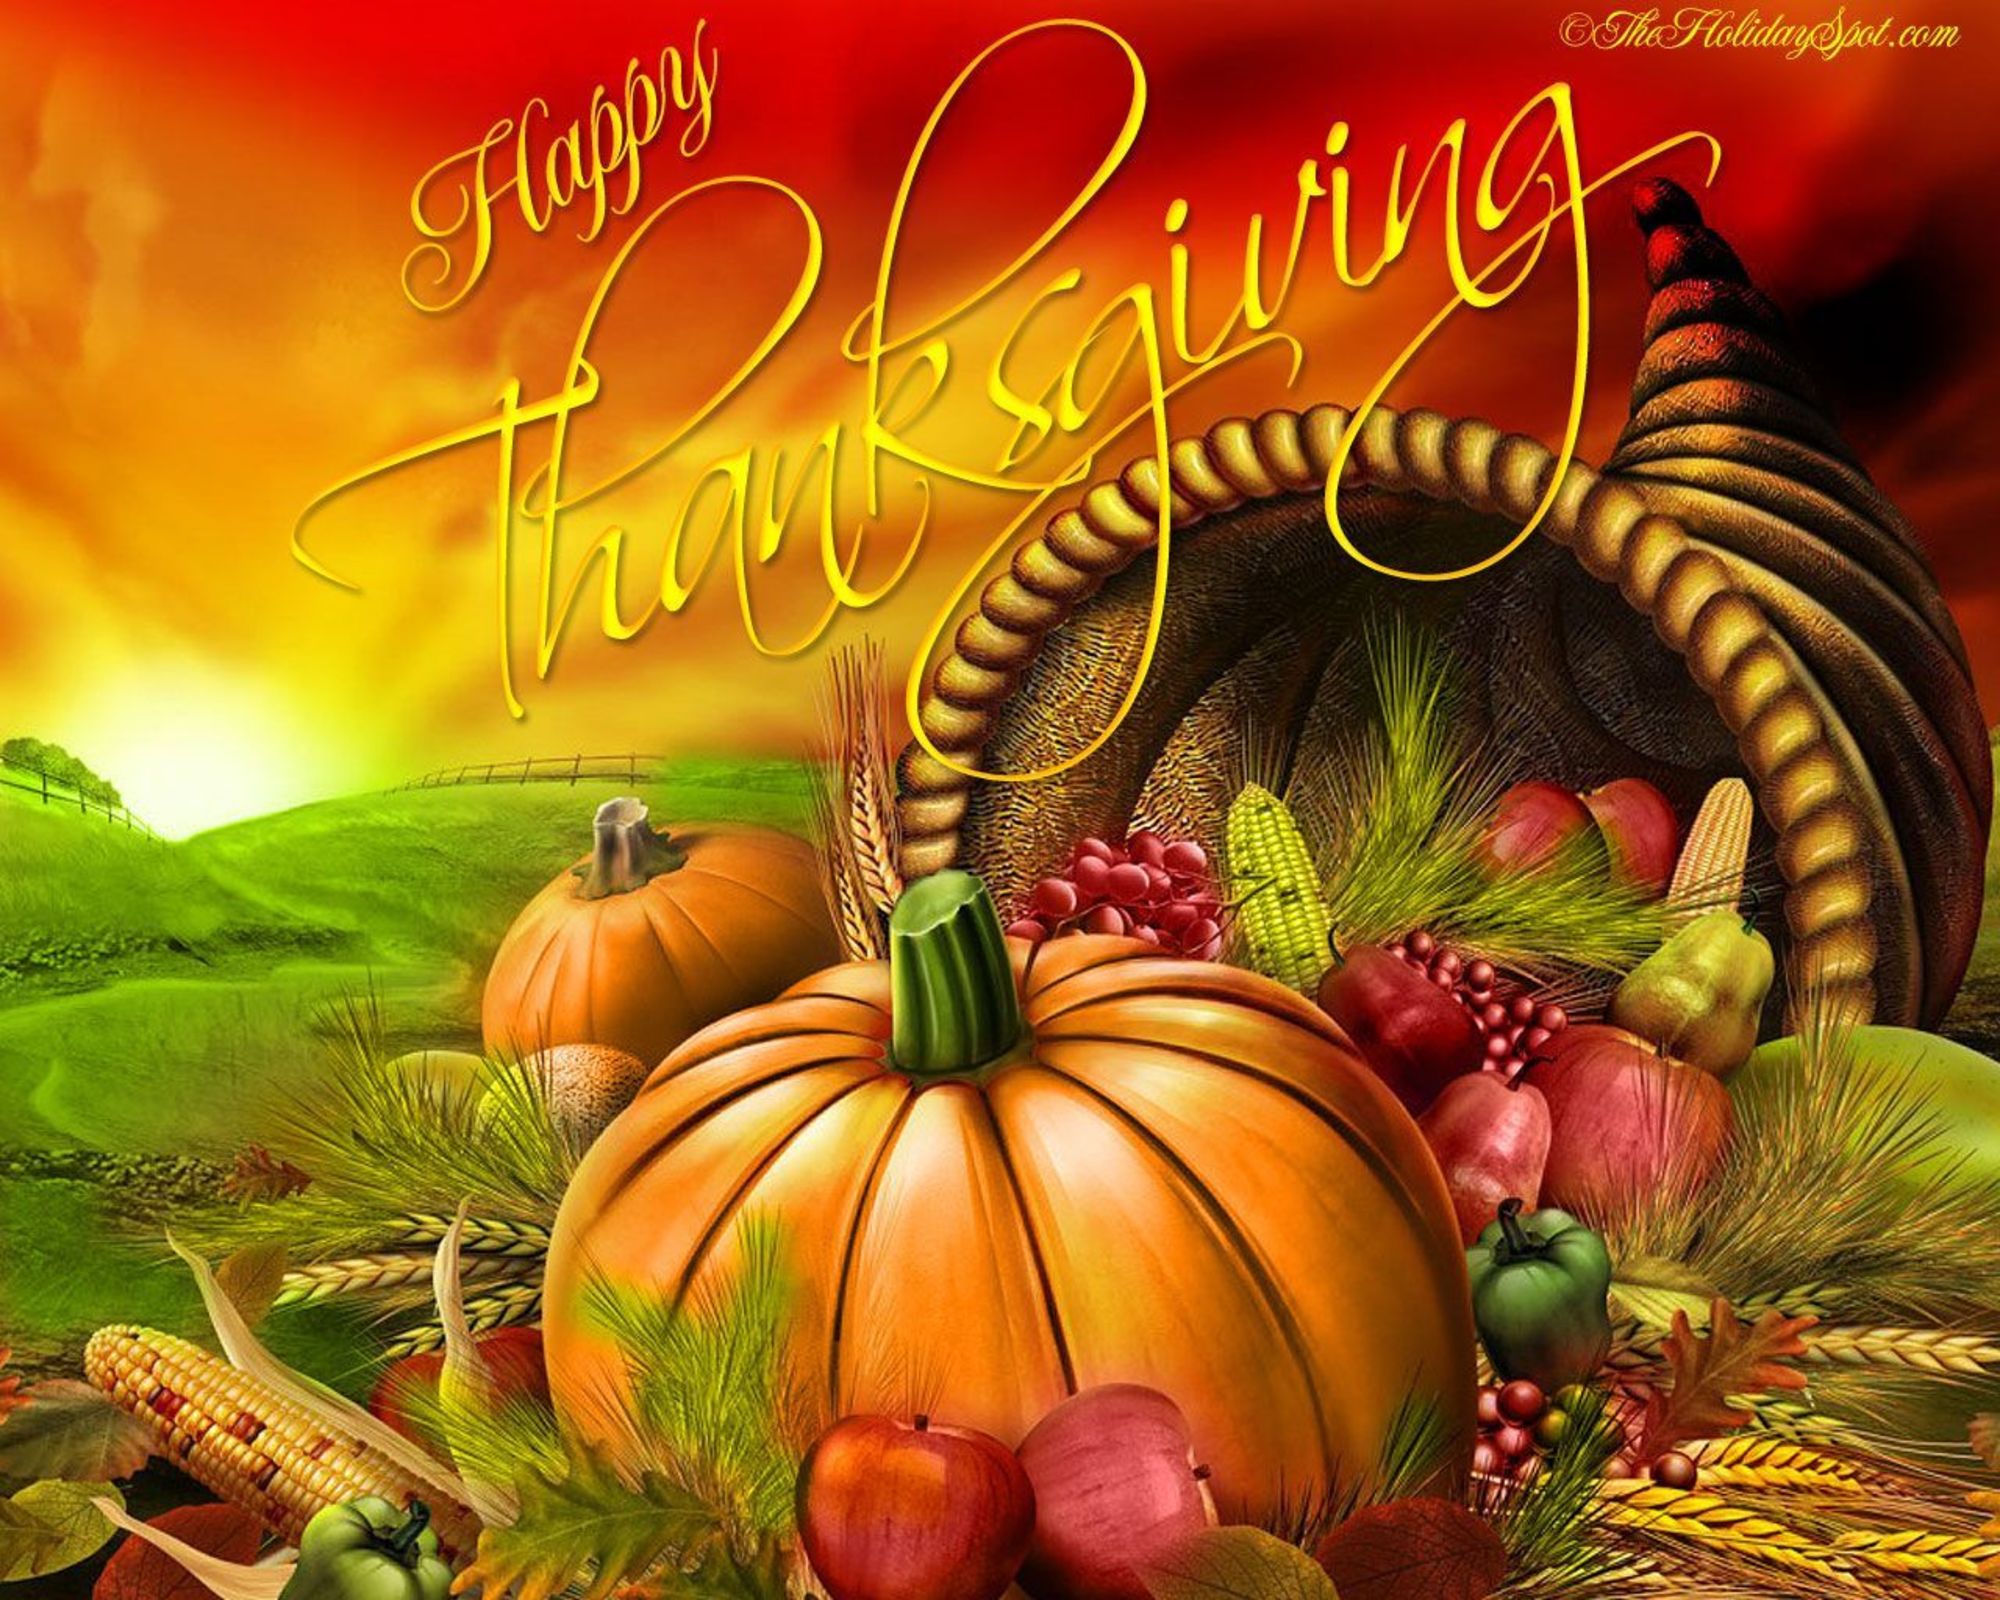 Happy Thanksgiving Wallpaper Background For Desktop